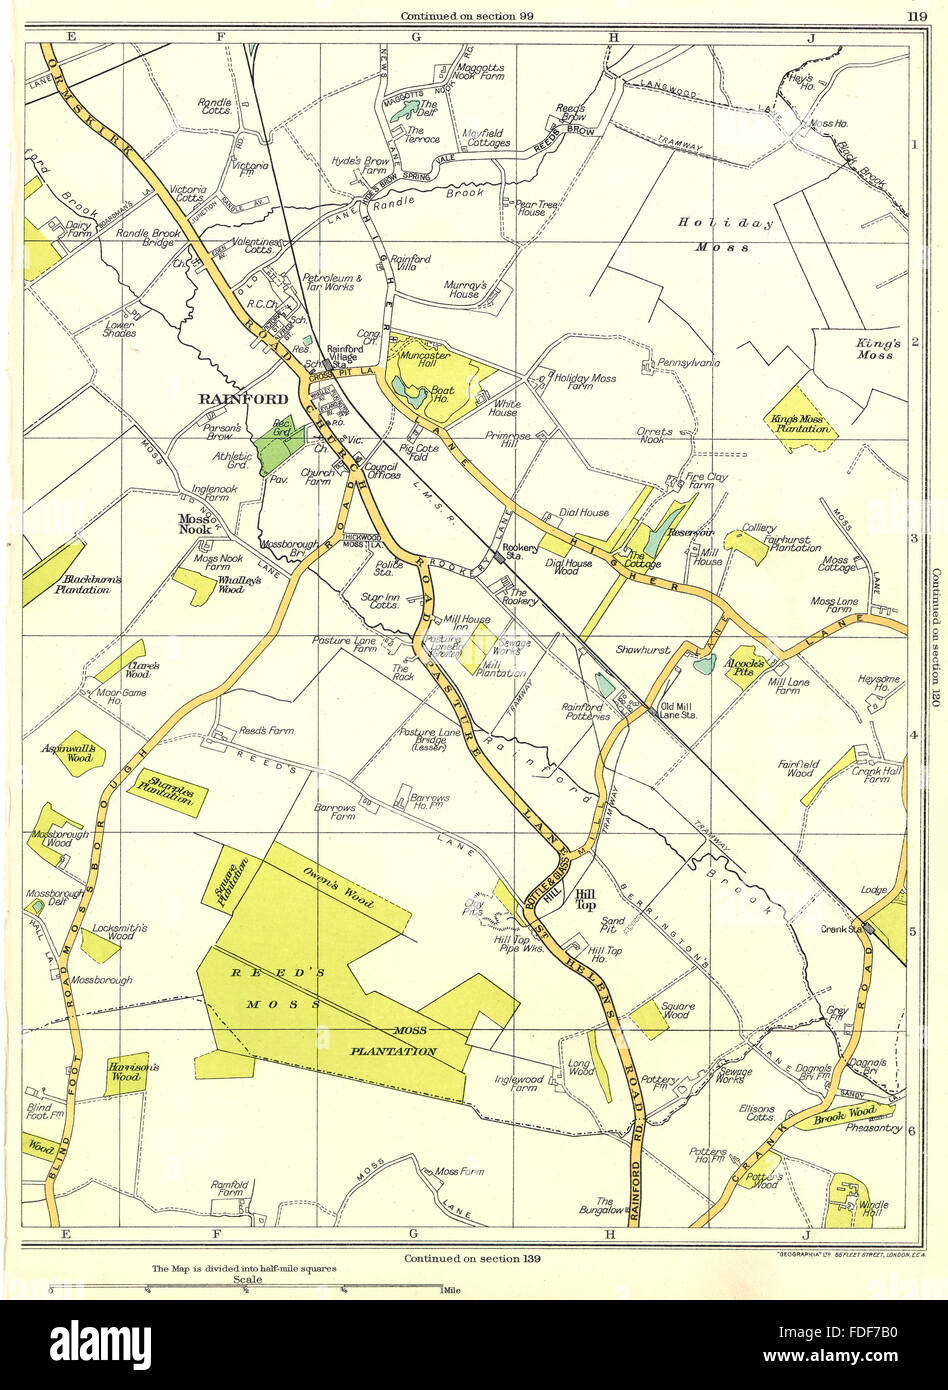 LANCASHIRE Rainford Moss NOOK Reed's Moss Plantation Hilltop 1935 alte Karte Stockfoto